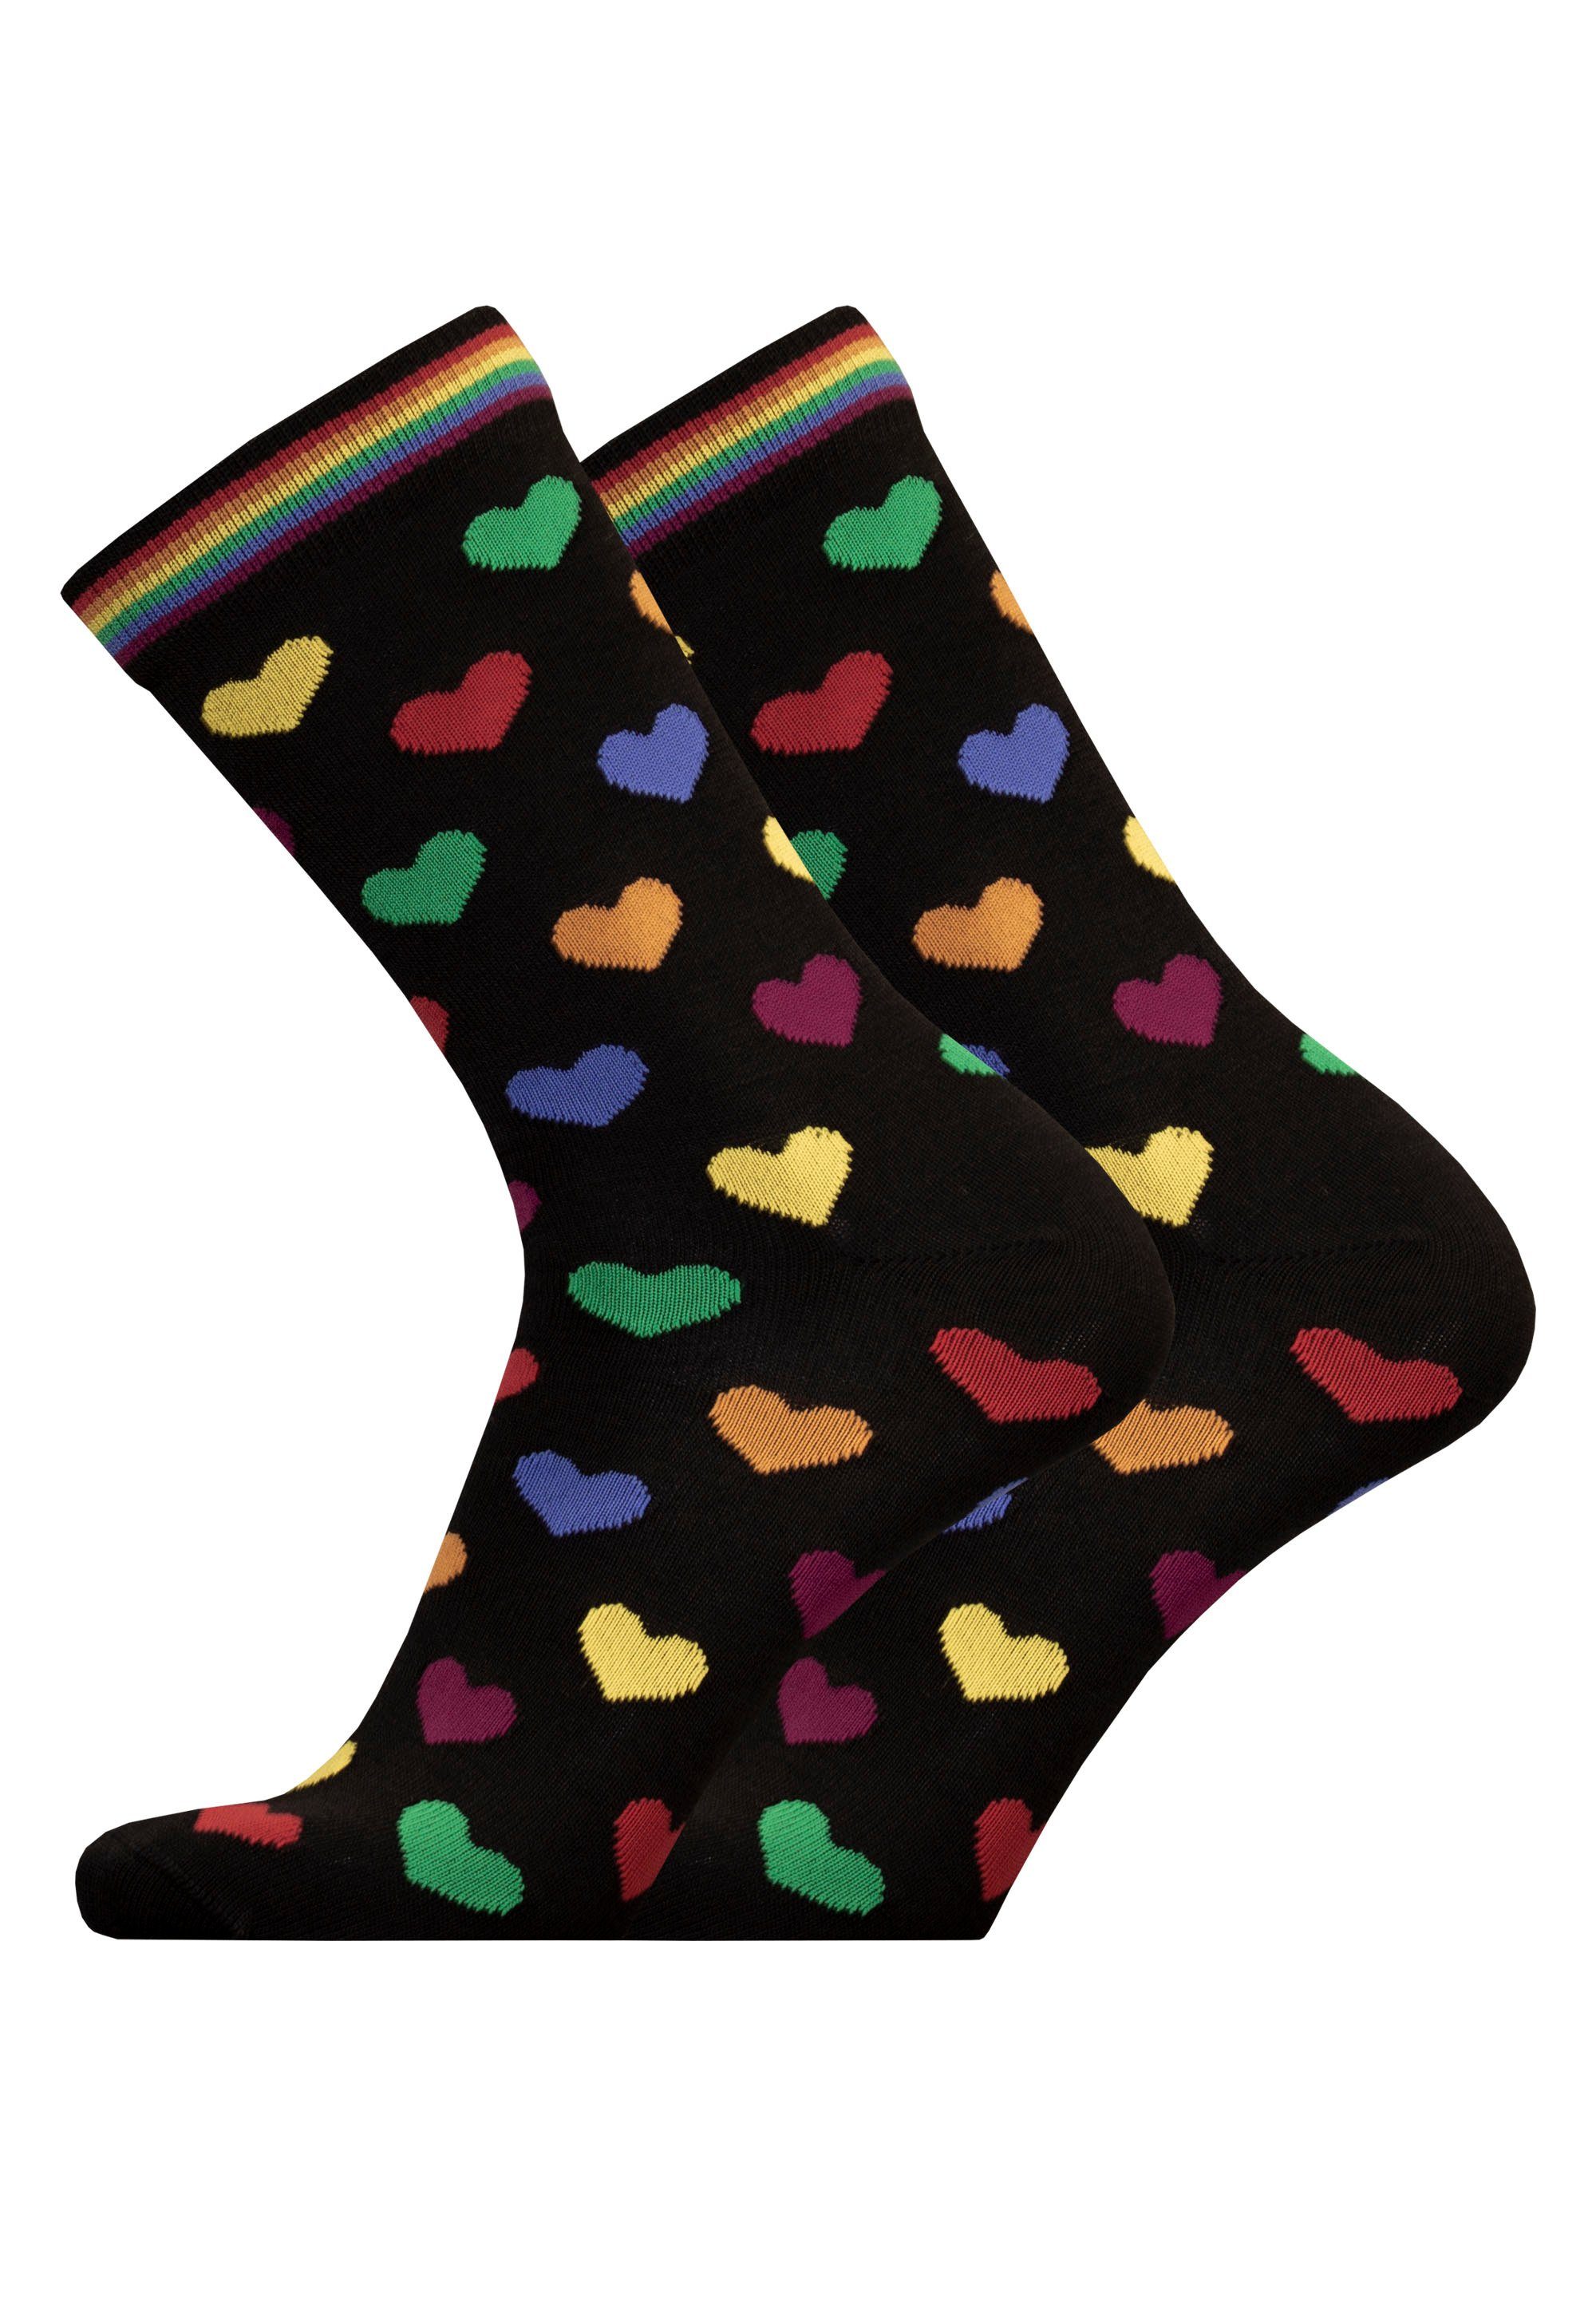 UphillSport Socken RAINBOW HEARTS 2er Pack (2-Paar) mit niedlichen Herz-Prints | Socken